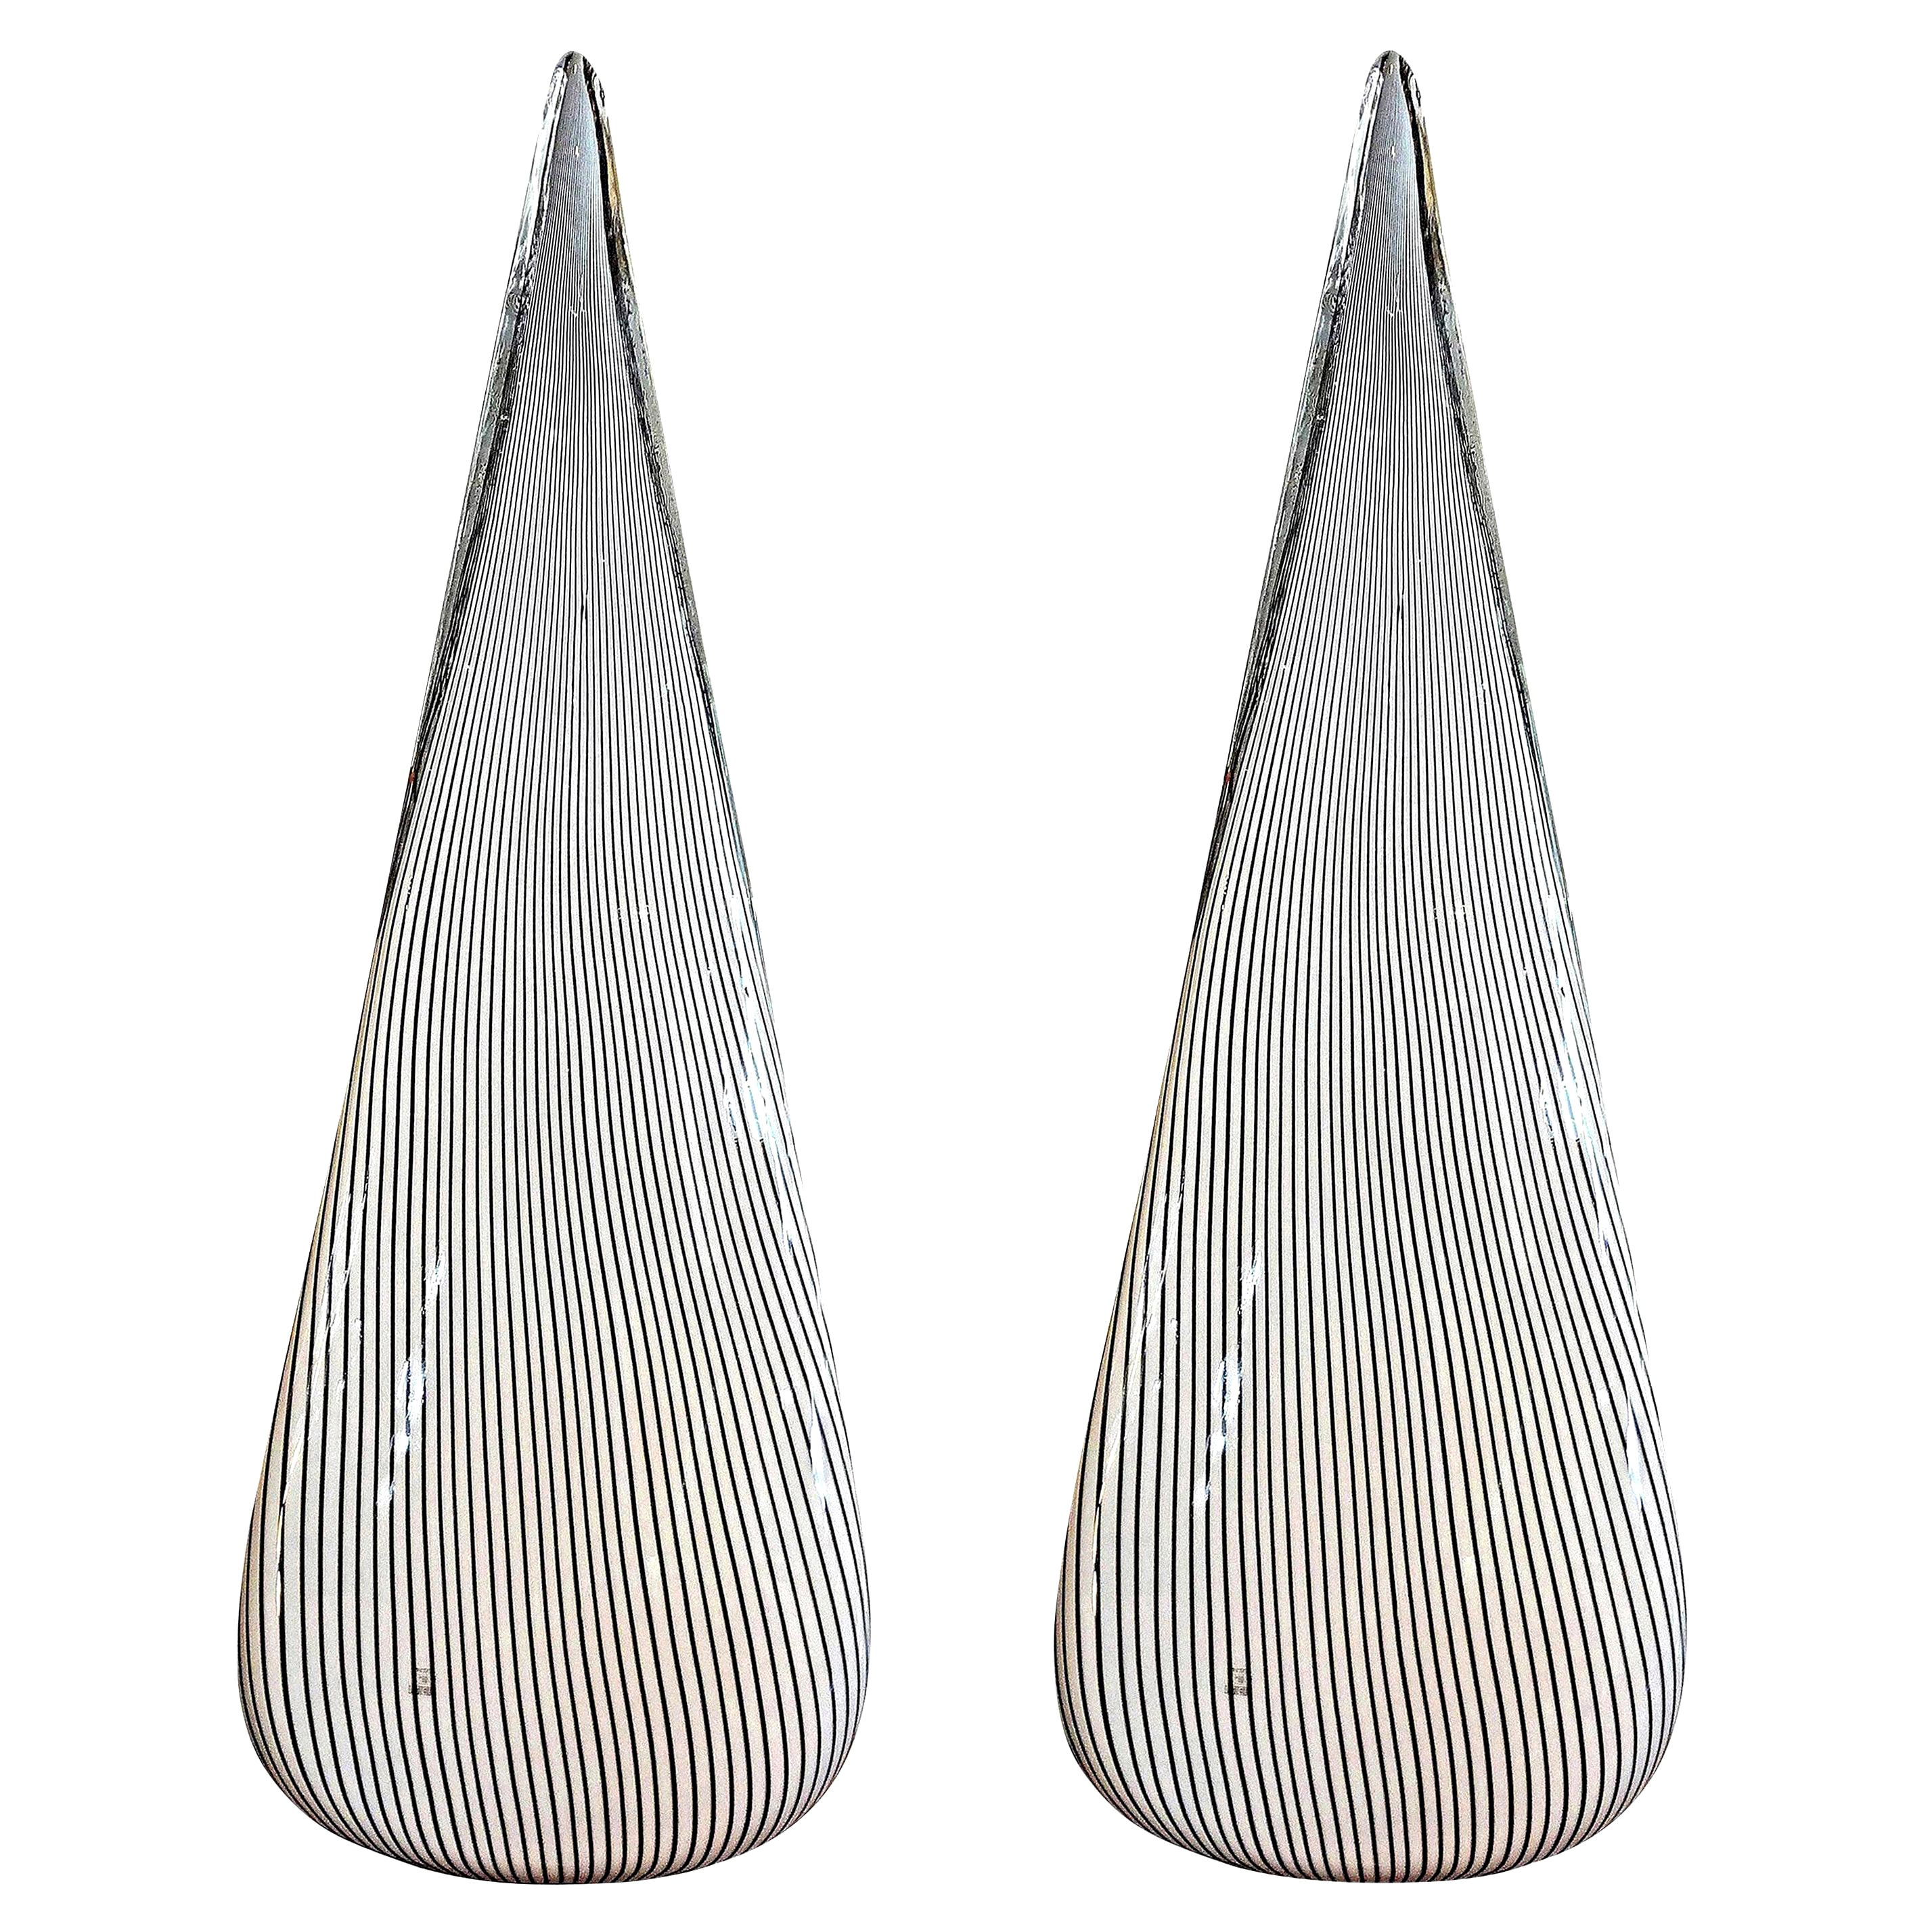 Pair of Murano Glass Lamps by Vetri